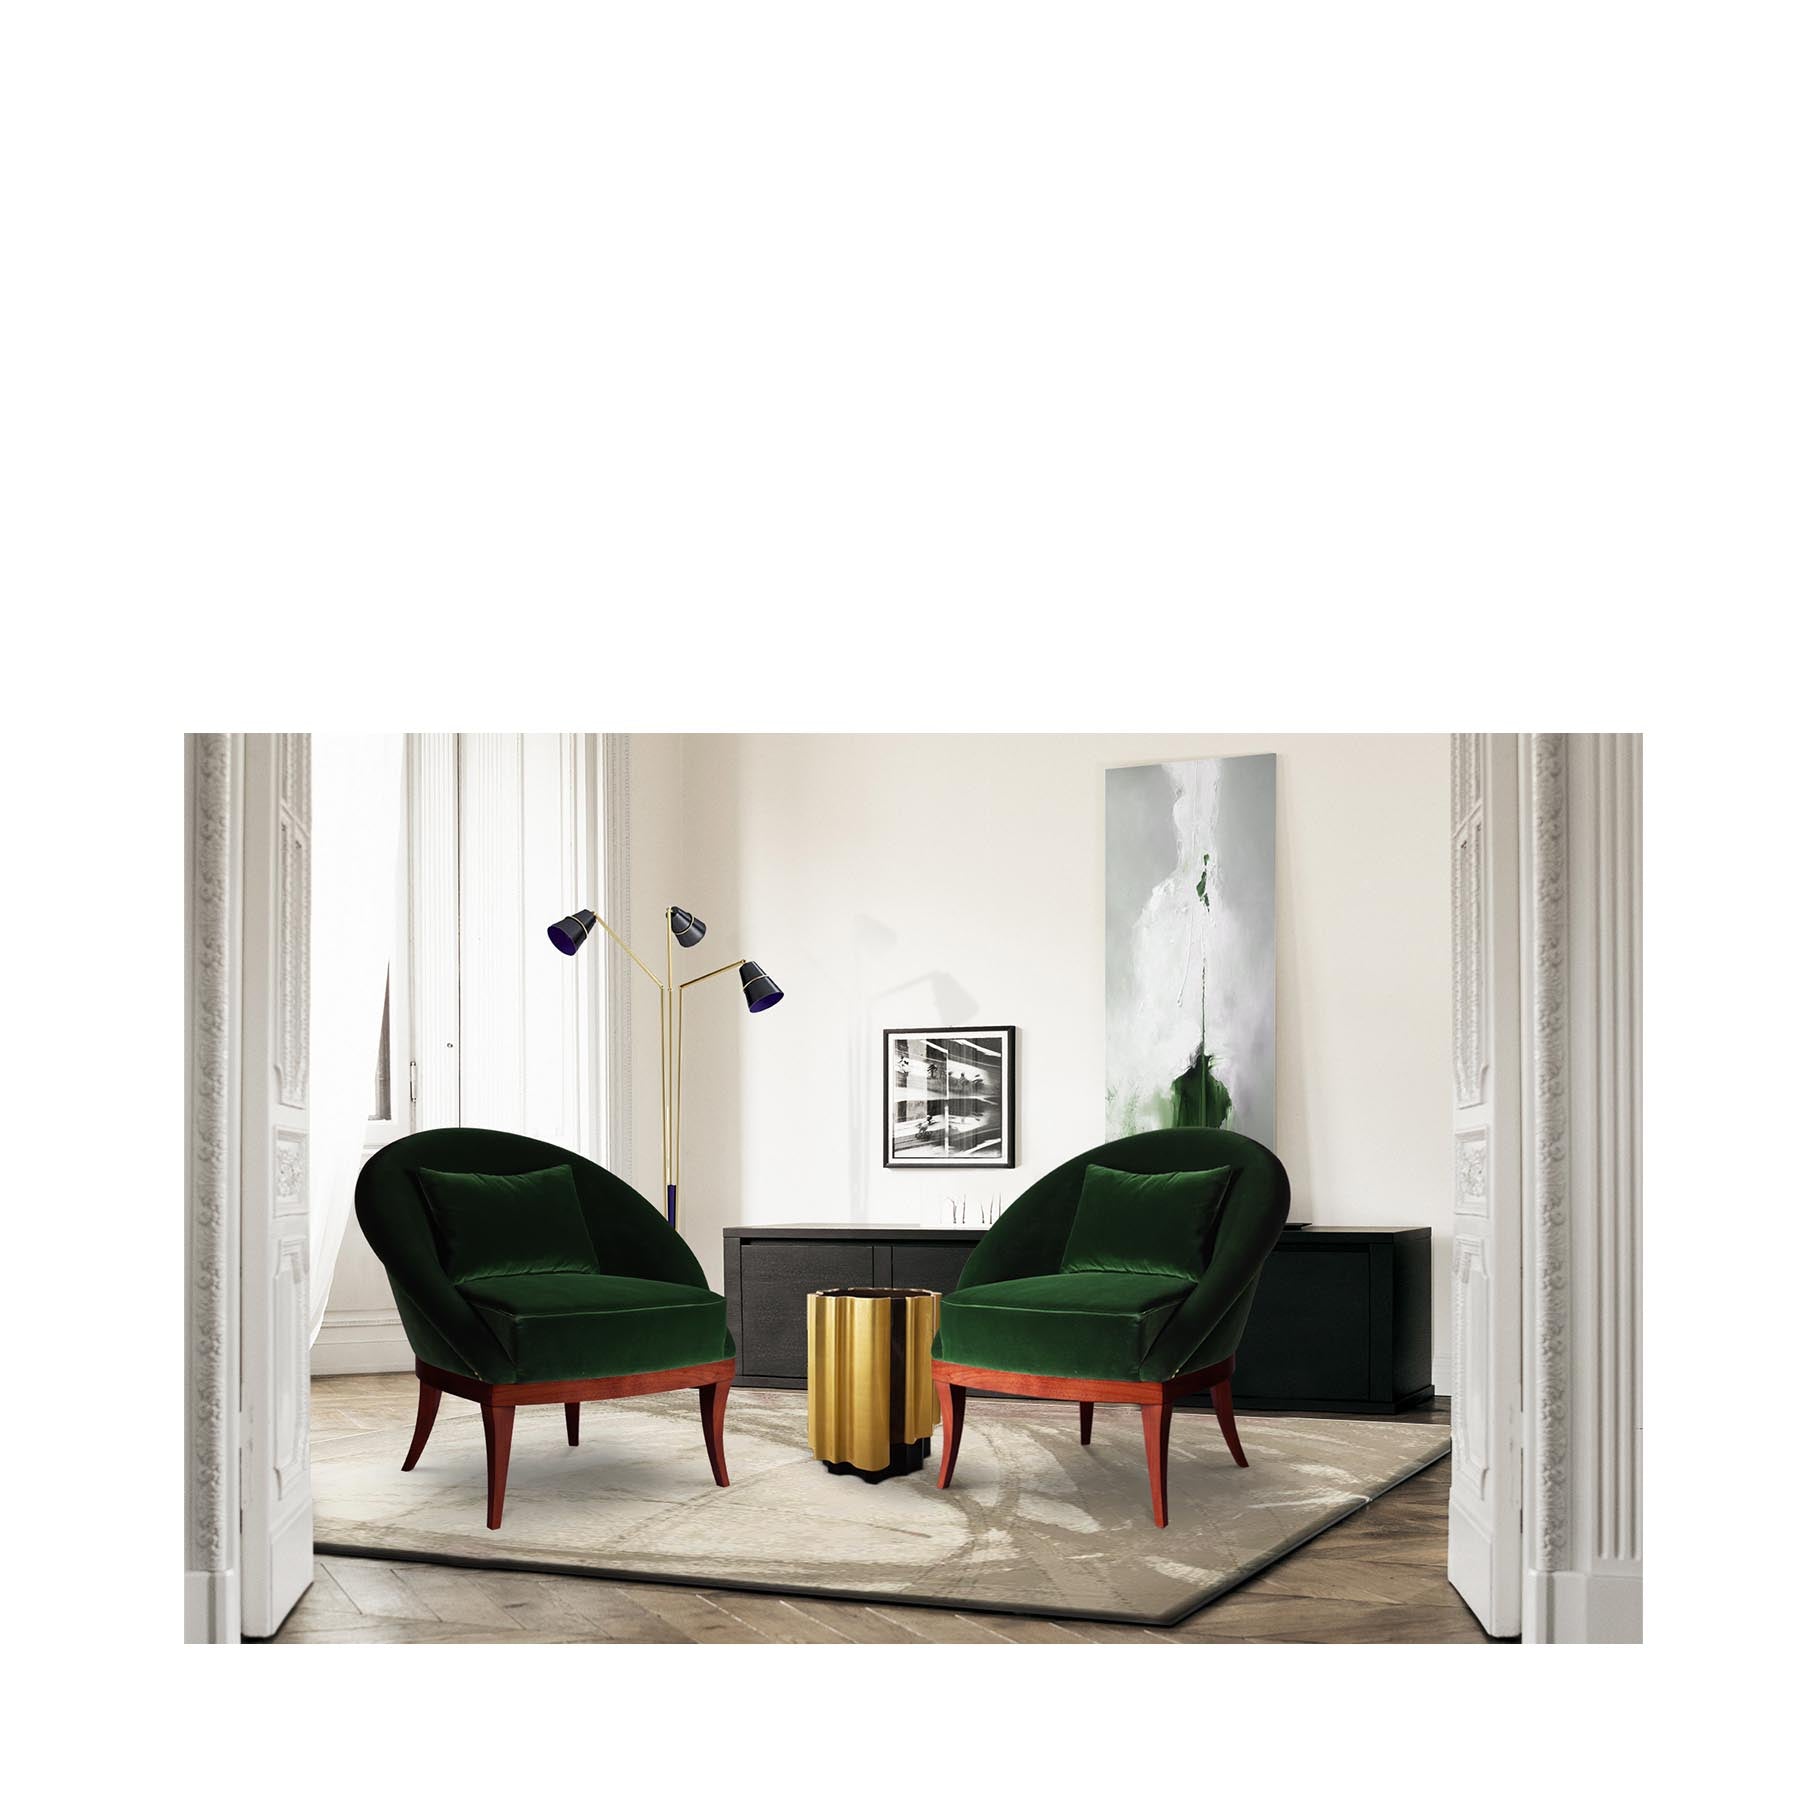 KIM - ARMCHAIR | Modern Furniture + Decor